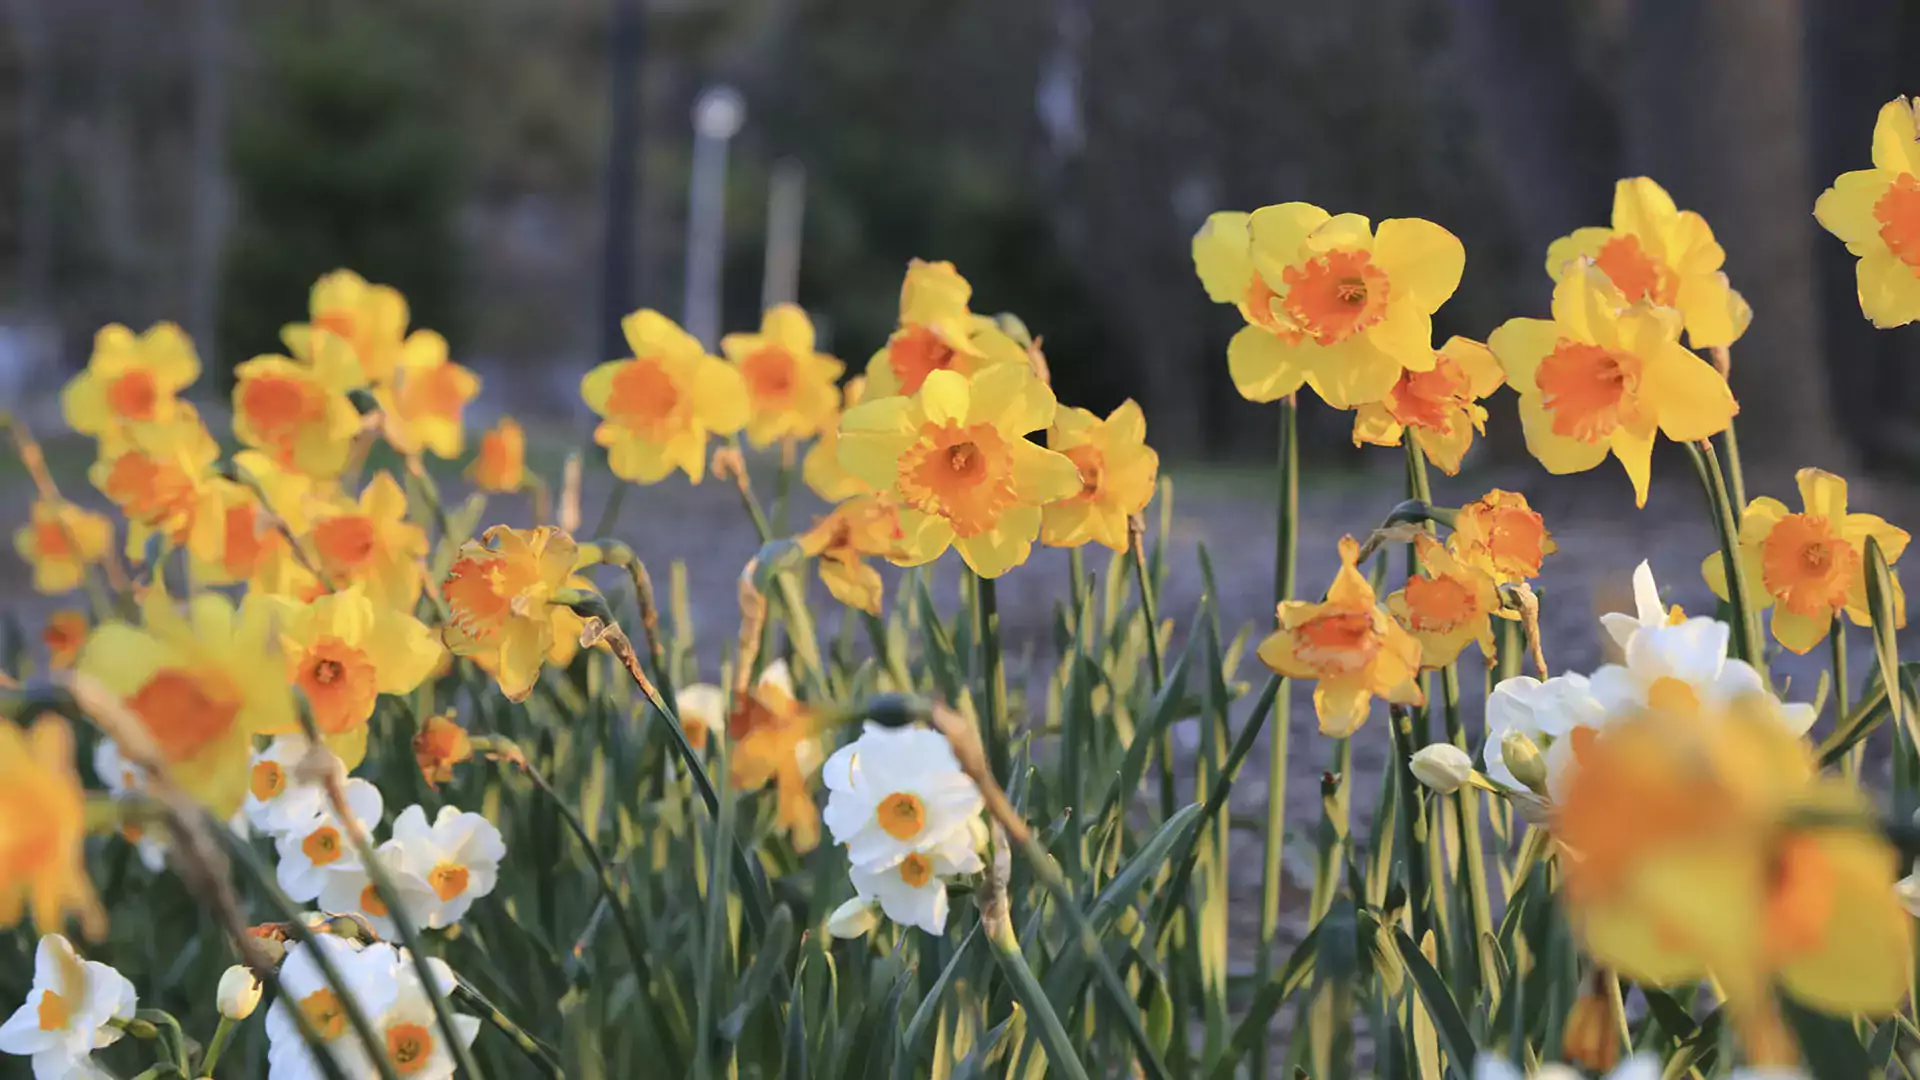 Closeup of daffodils